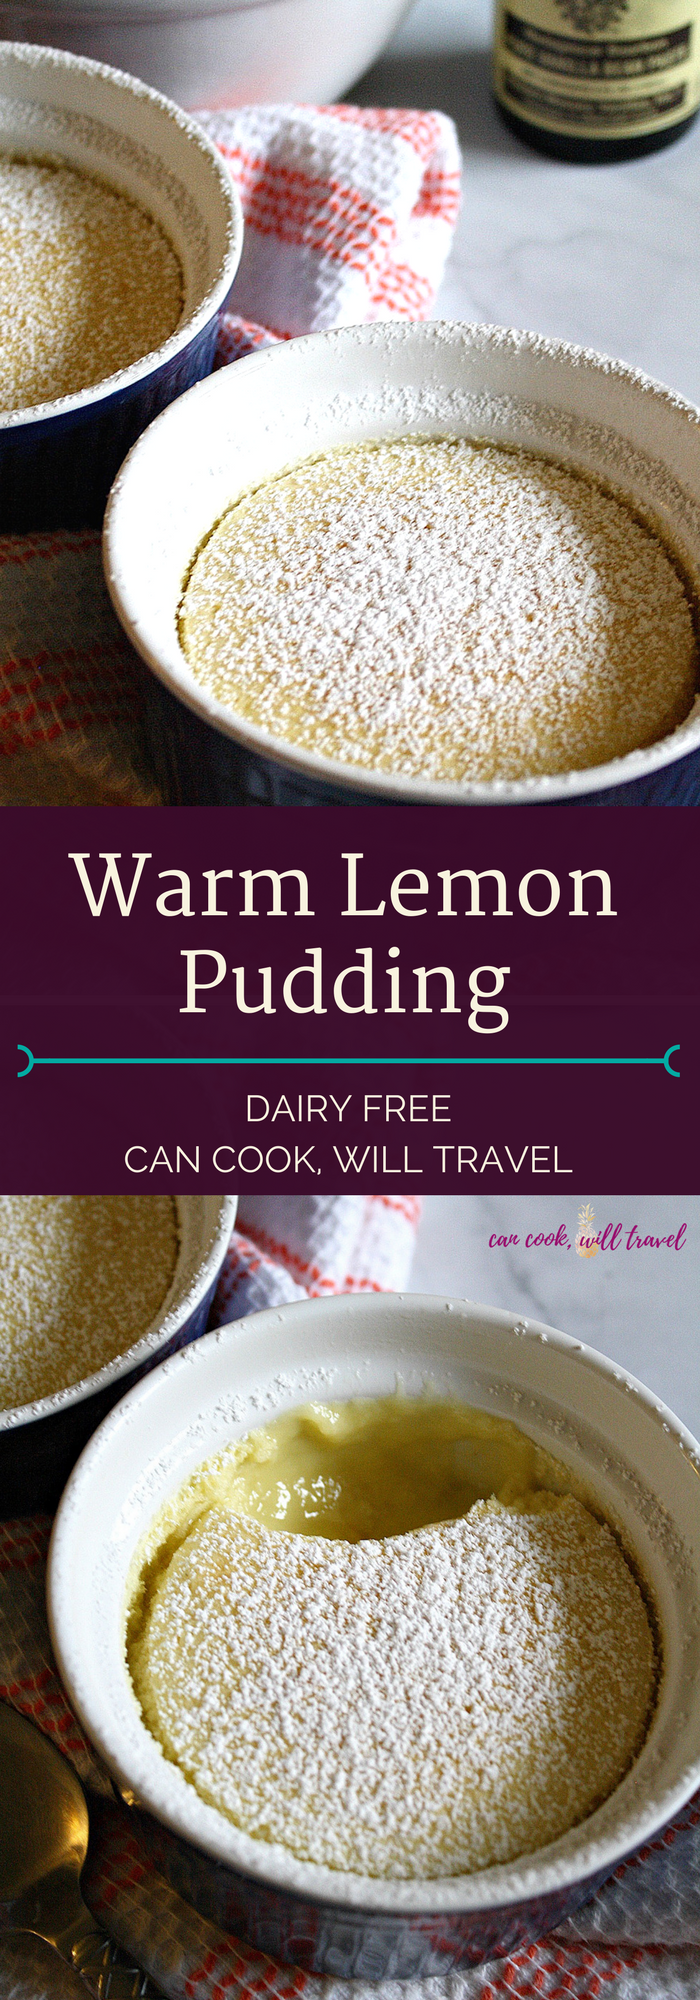 Warm Lemon Pudding_Collage1